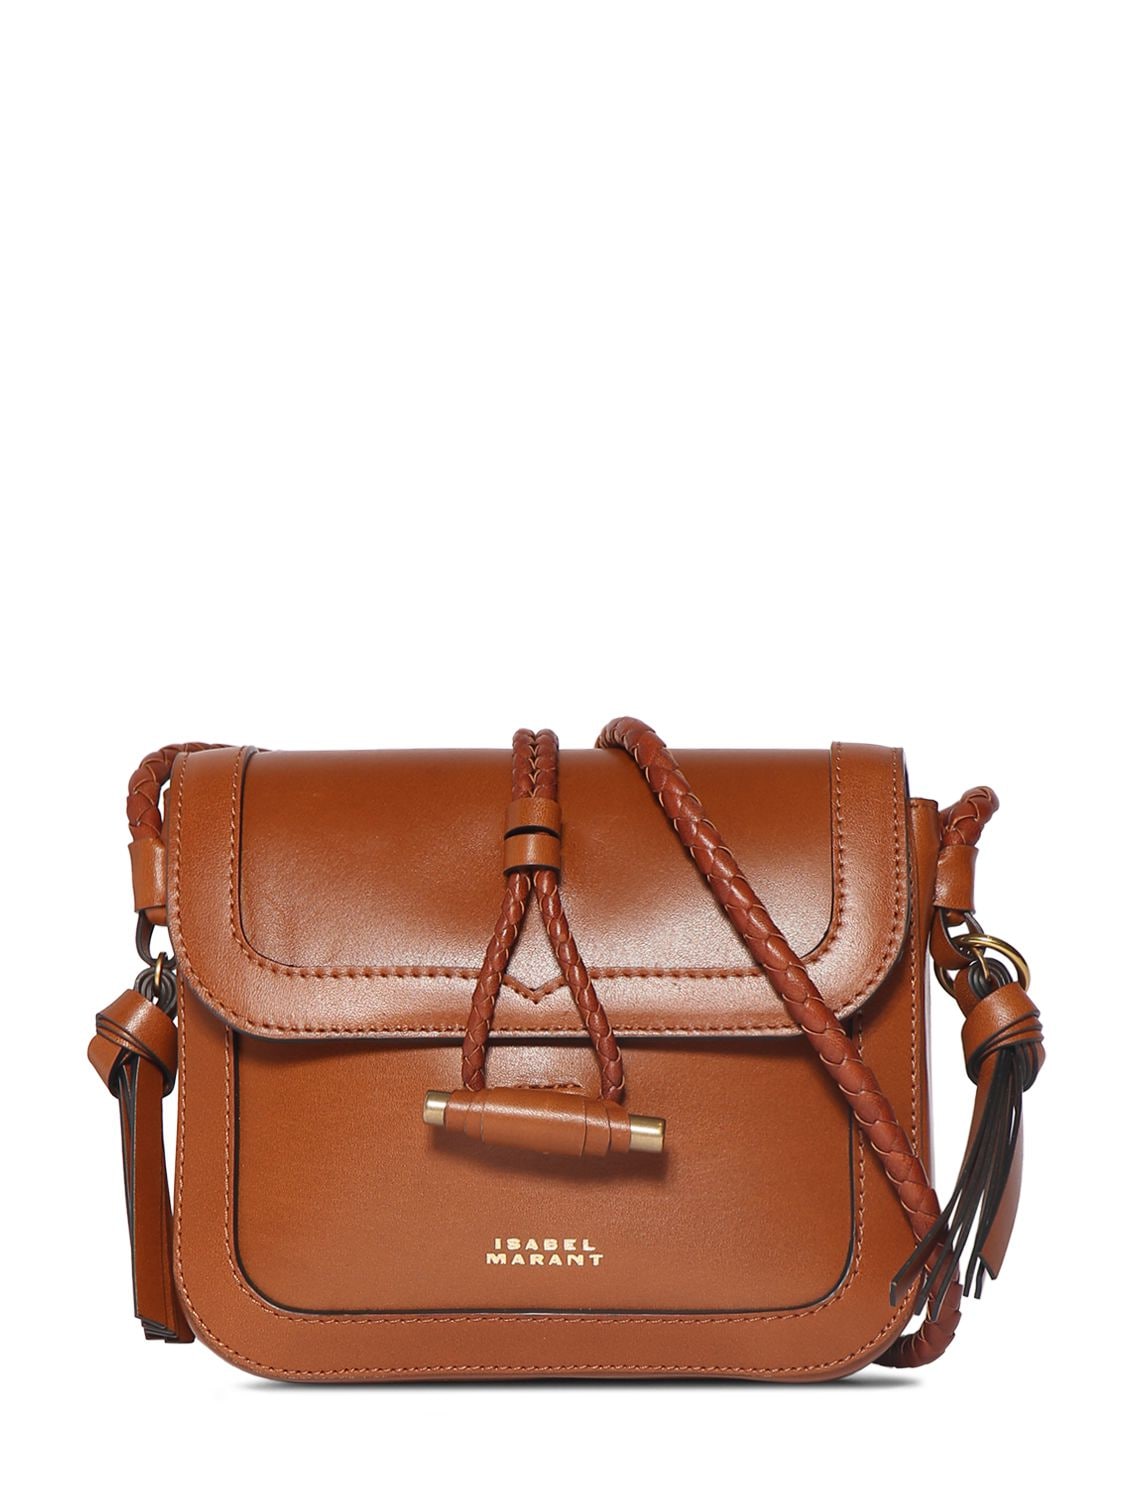 Isabel Marant Vigo Leather Flap Bag In Cognac